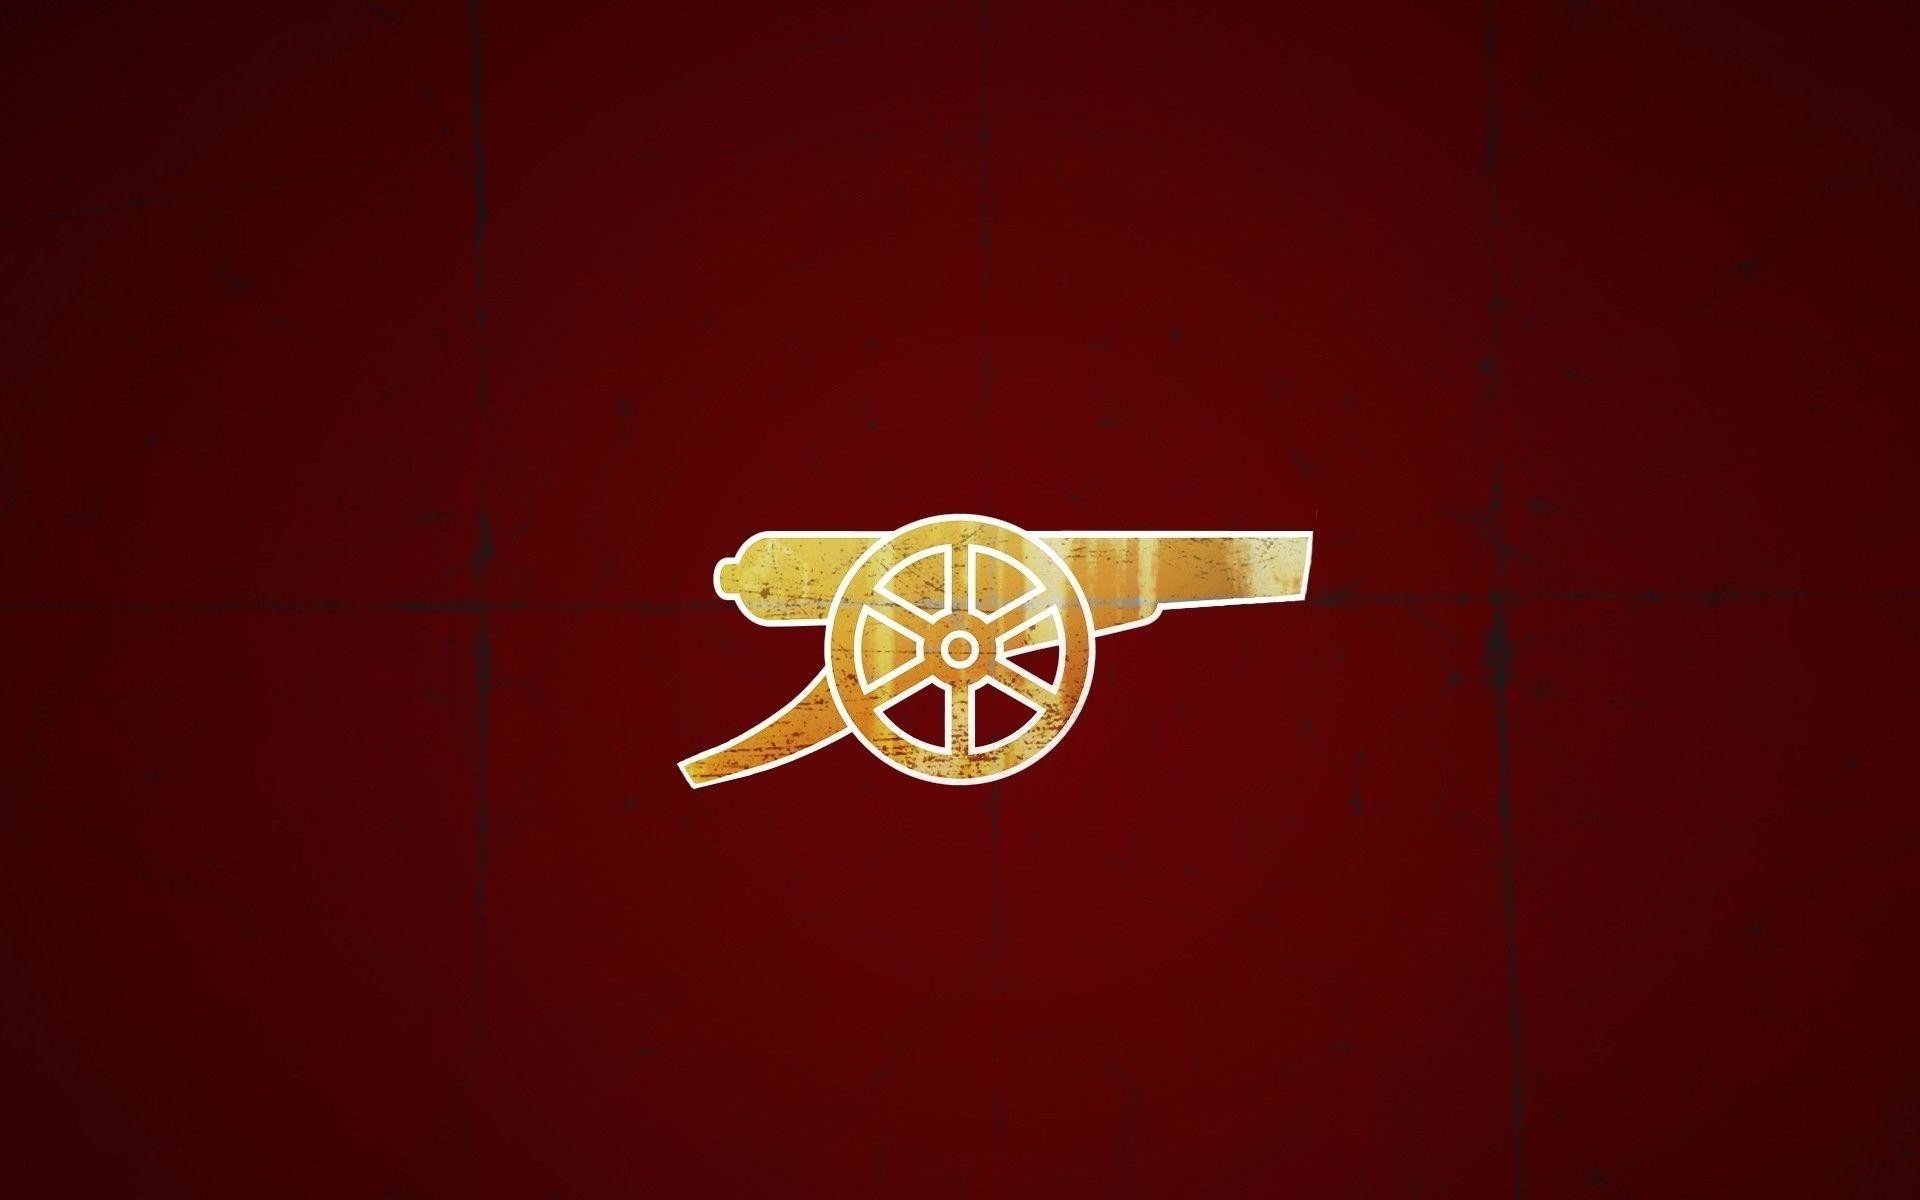 1920x1200  Arsenal Logo Wallpapers - Full HD wallpaper search